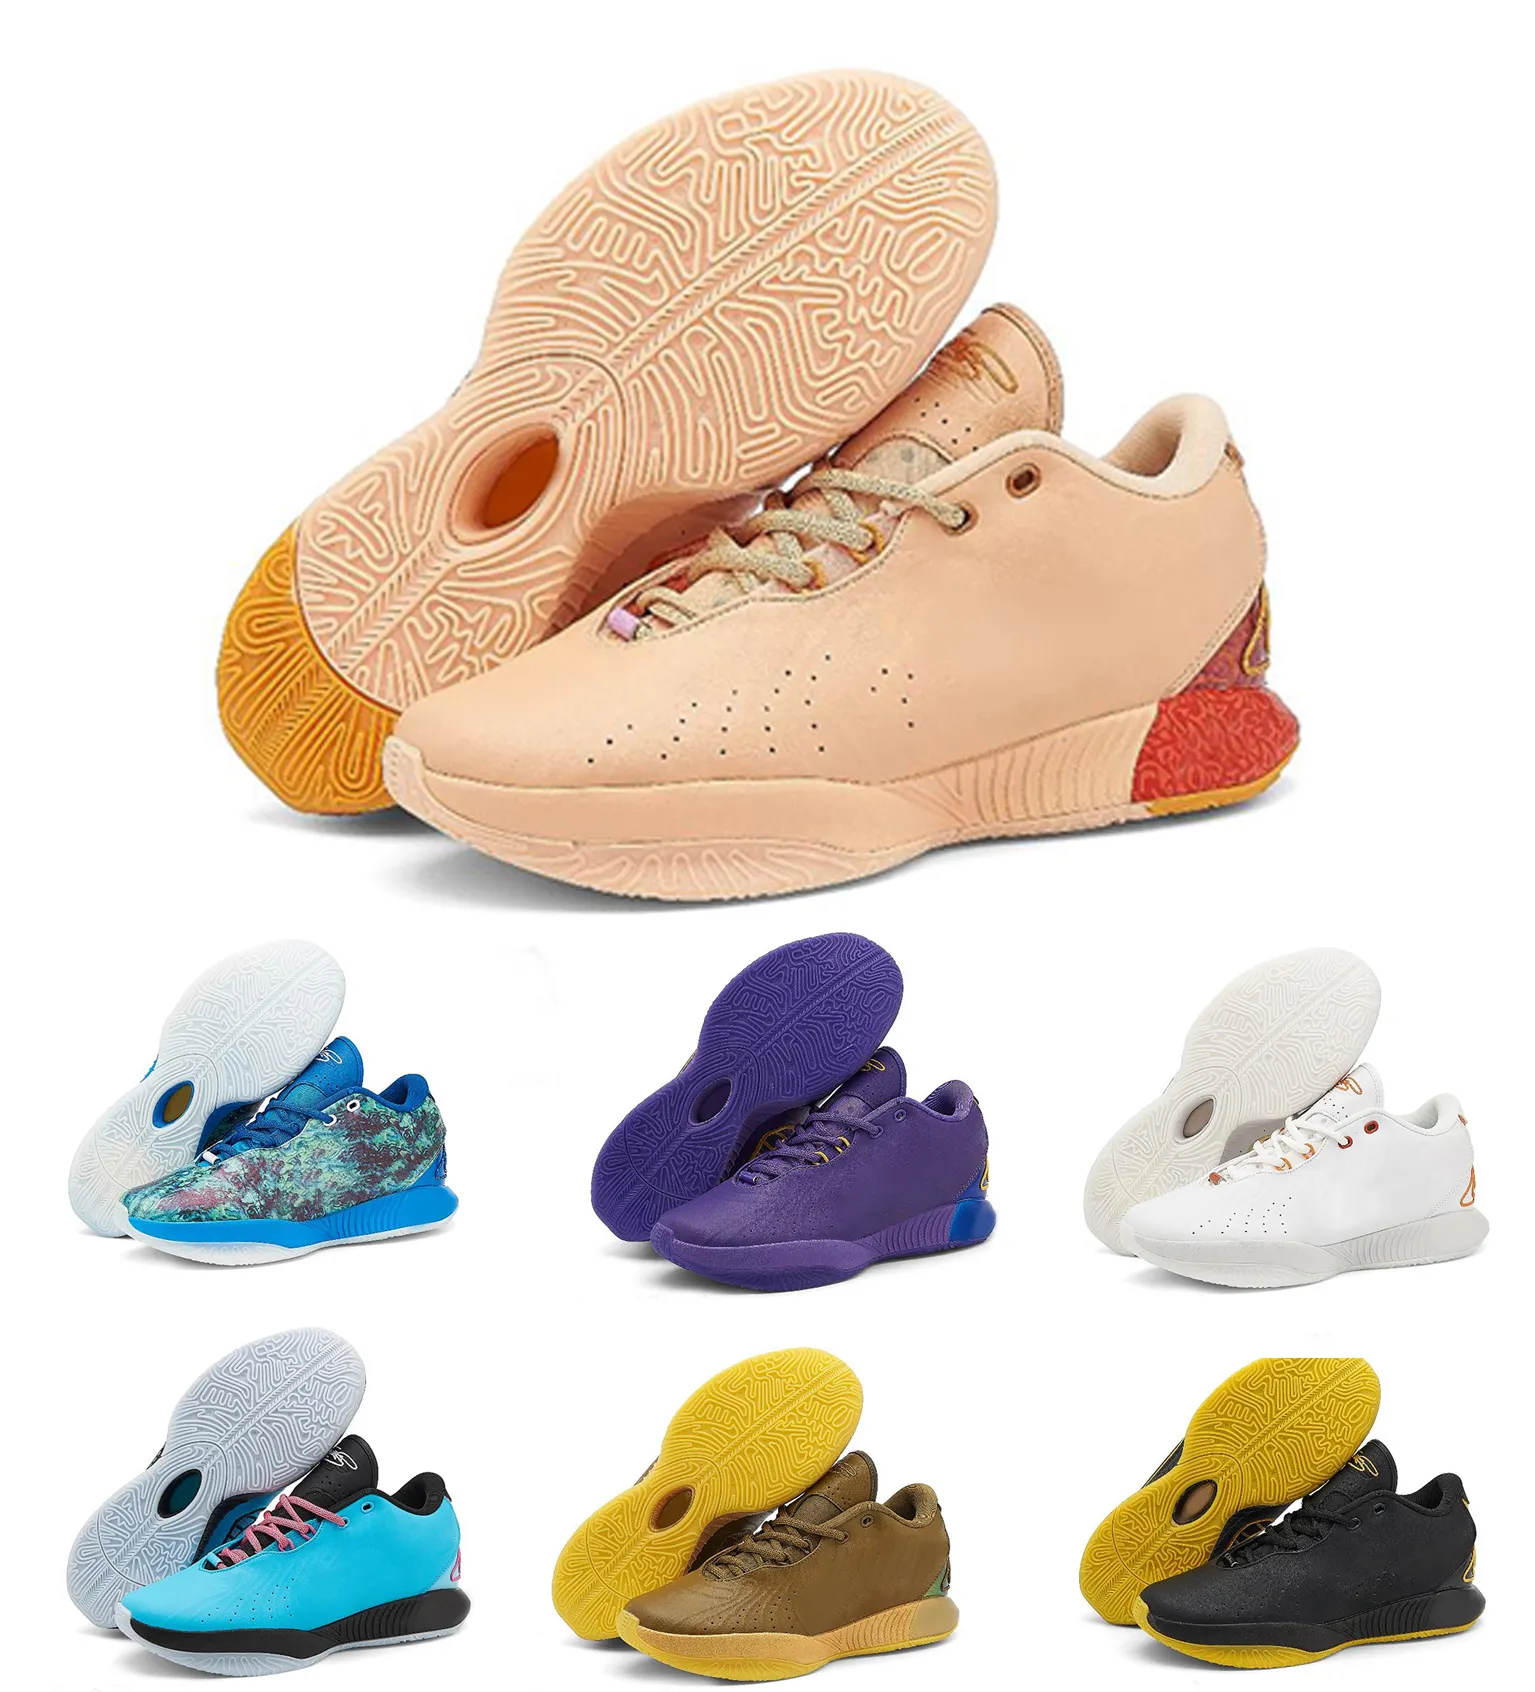 Lebrons 21 Basketball Shoes Men's Training Sneakers Wholesale popular yakuda dhgate Discount sports wholesale popular